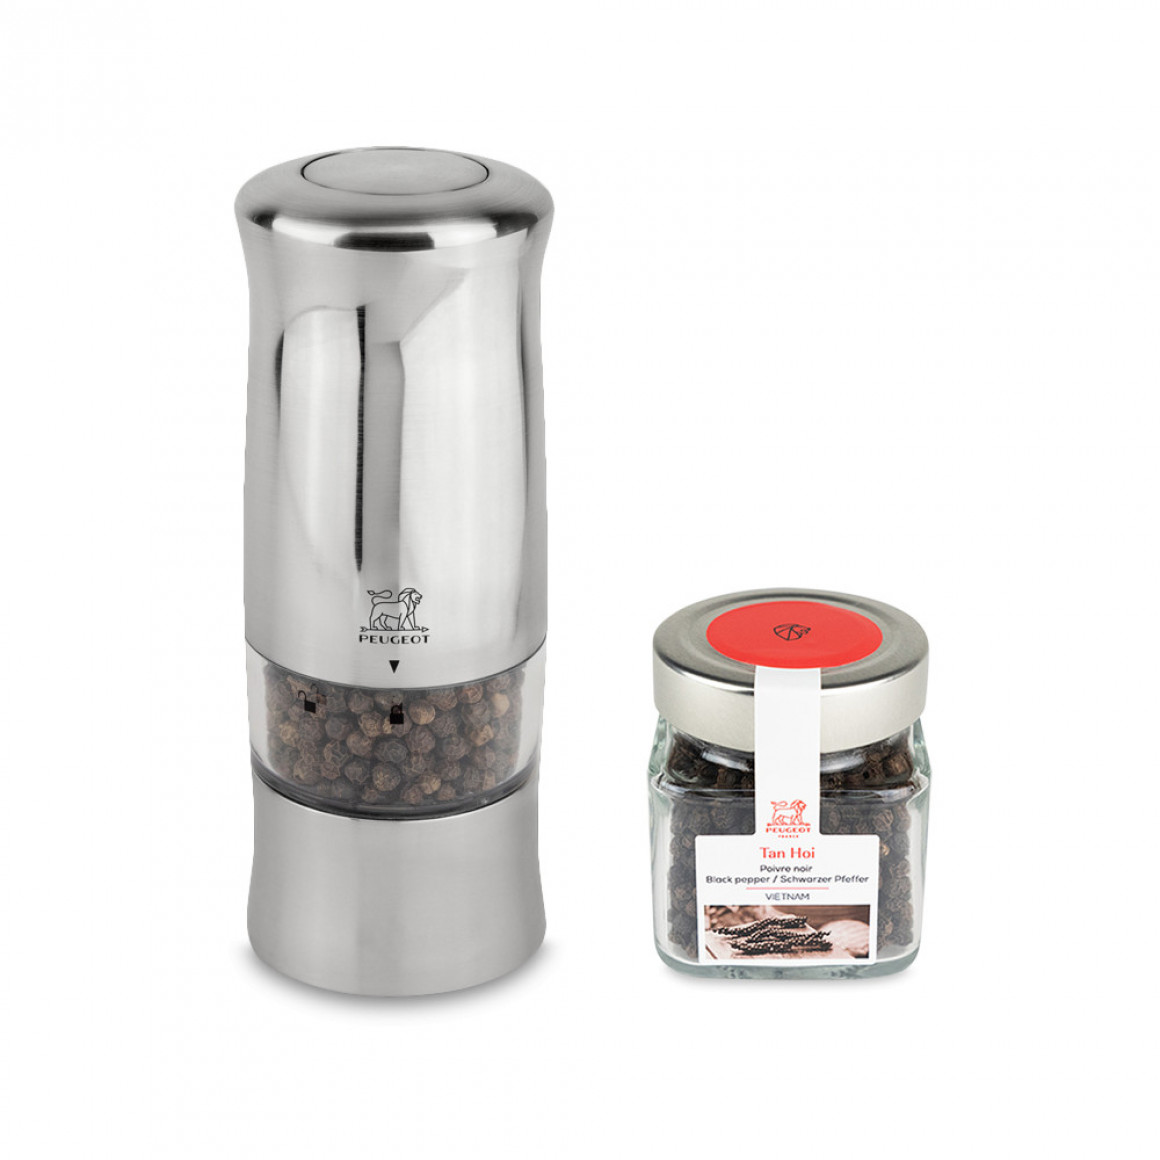 Zeli pepper mill + Tan Hoi Pepper Jar